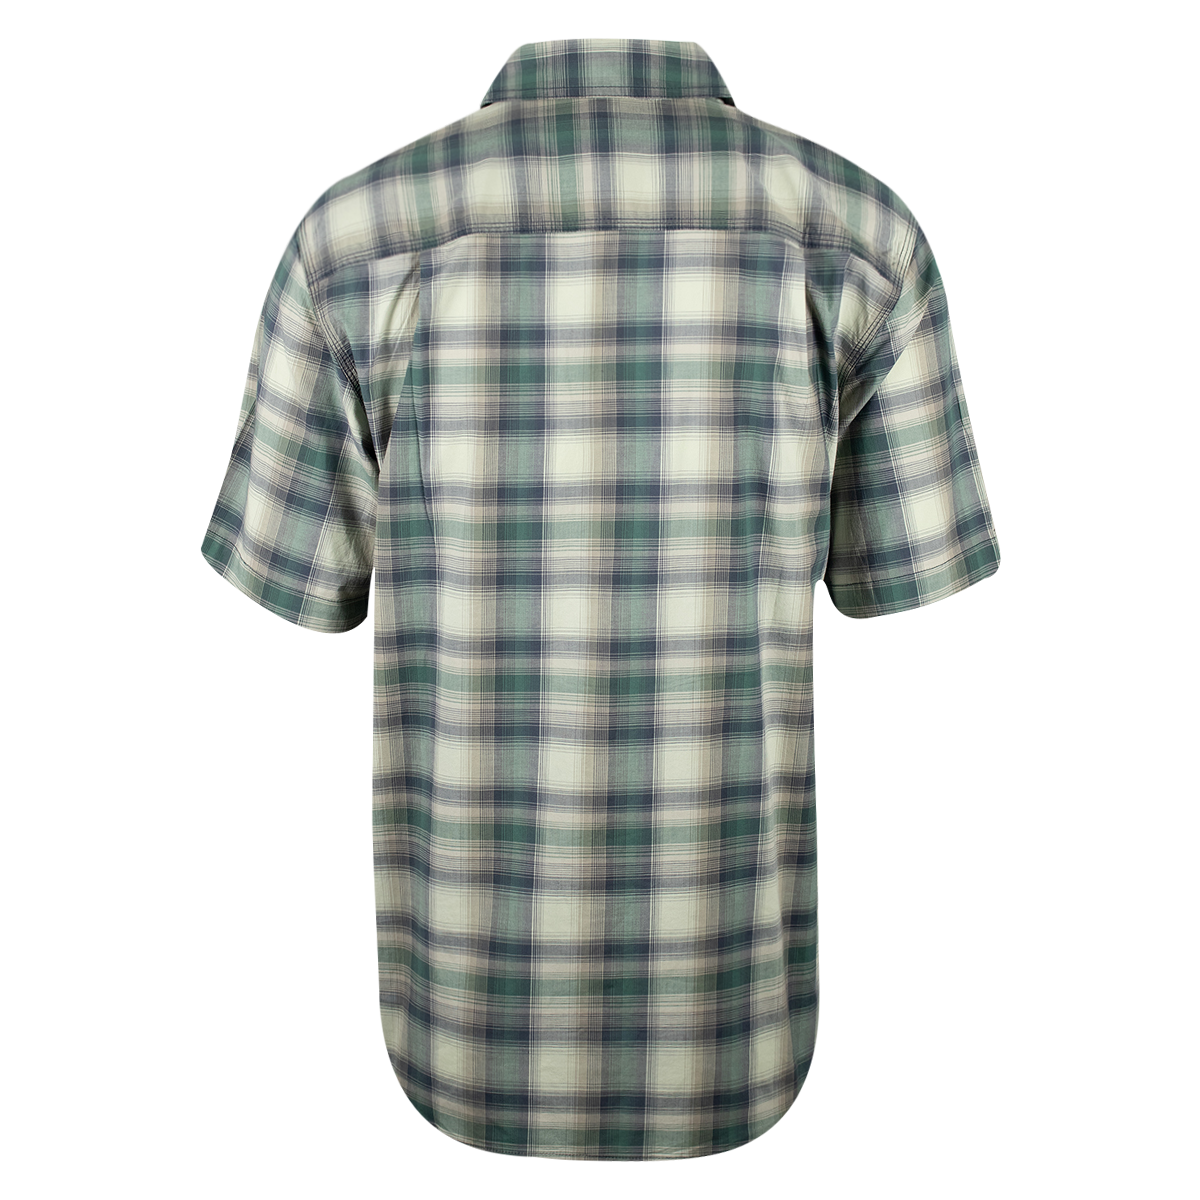 Carhartt Men's Green Grey Navy Plaid Relaxed Fit S/S Woven Shirt (S17)